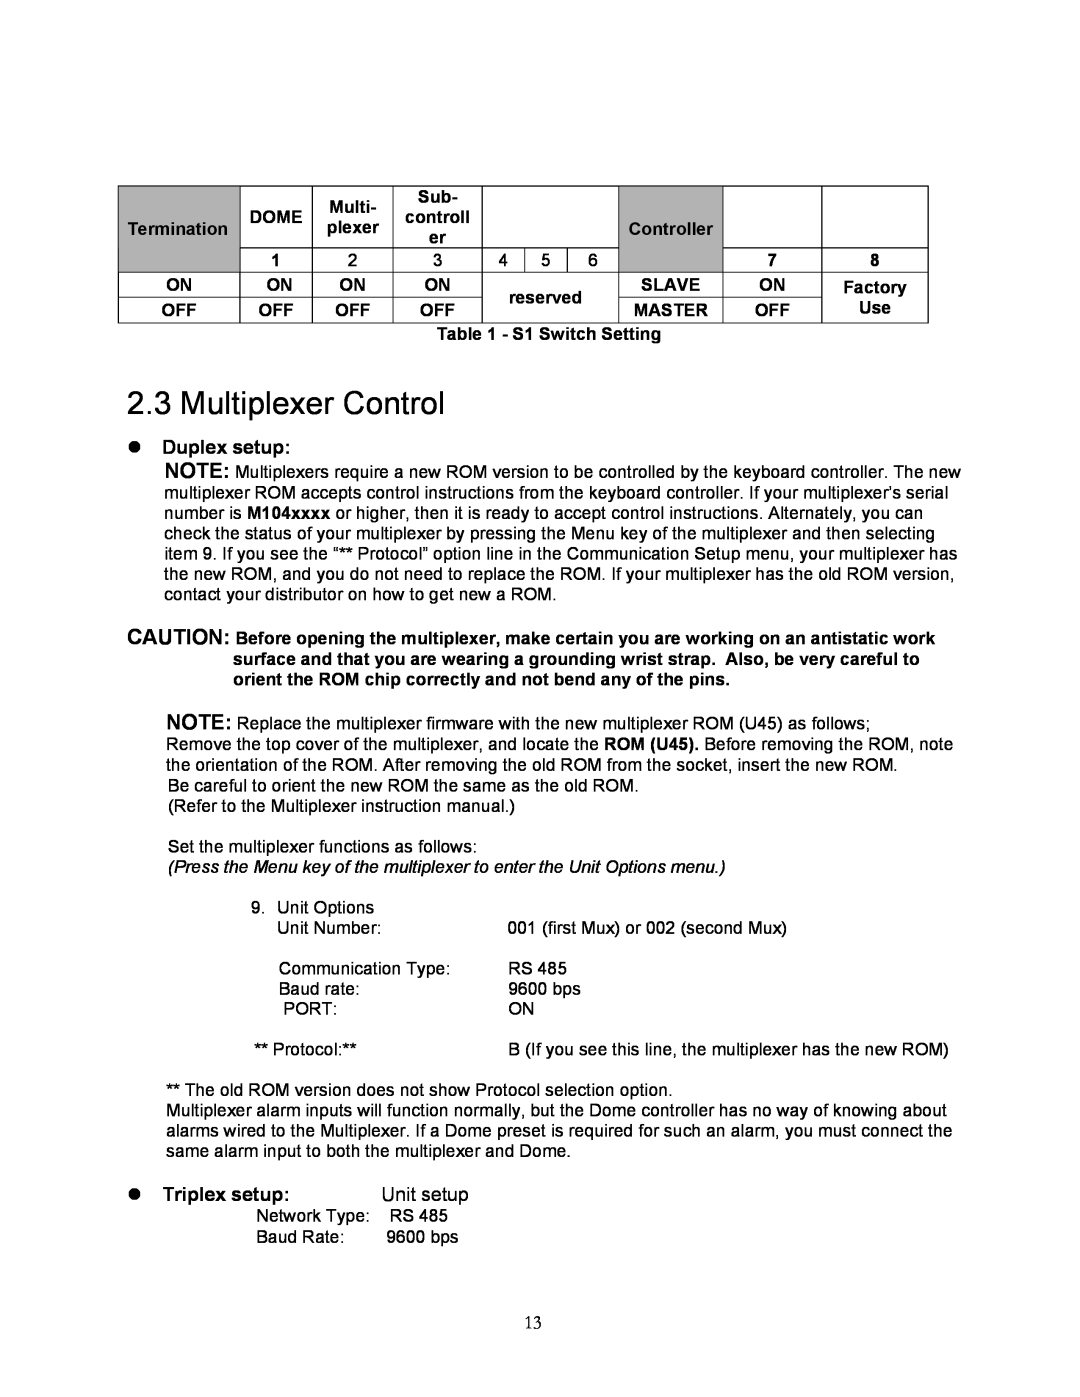 Speco Technologies KBD-927 instruction manual Multiplexer Control, Duplex setup, Triplex setup 